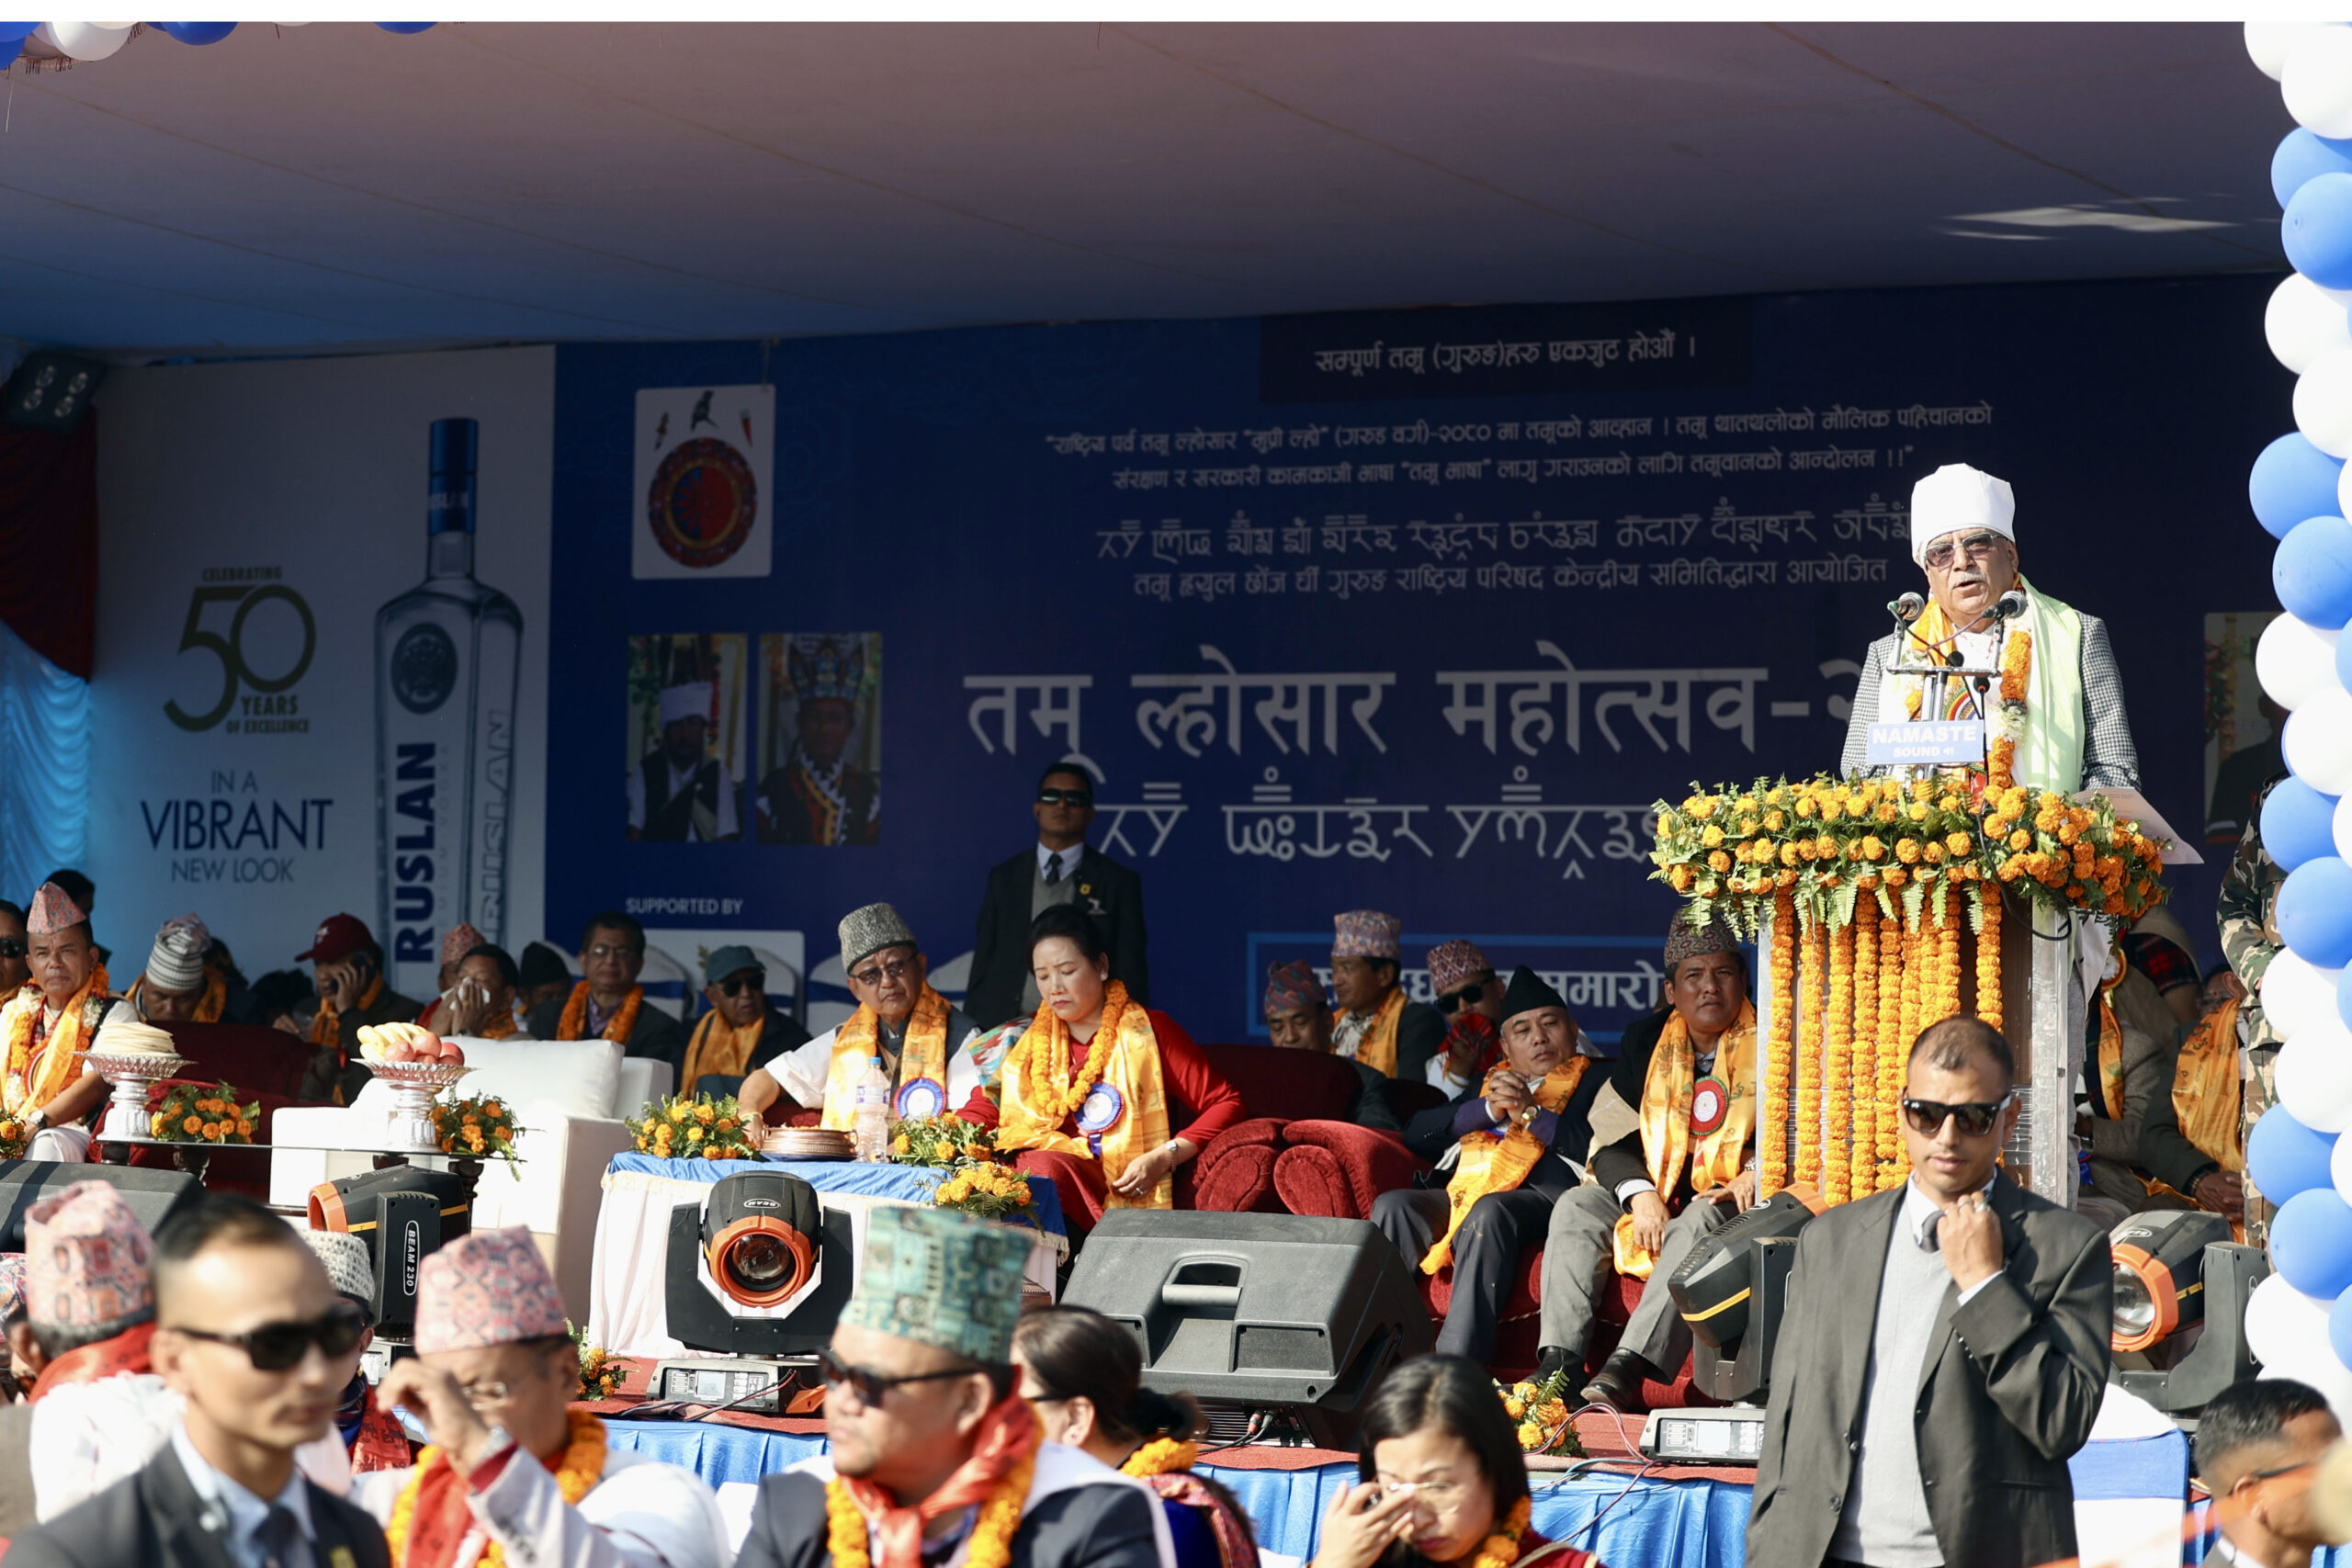 Tamu Lhosar festival contributes to promoting national unity: PM Dahal (photos)